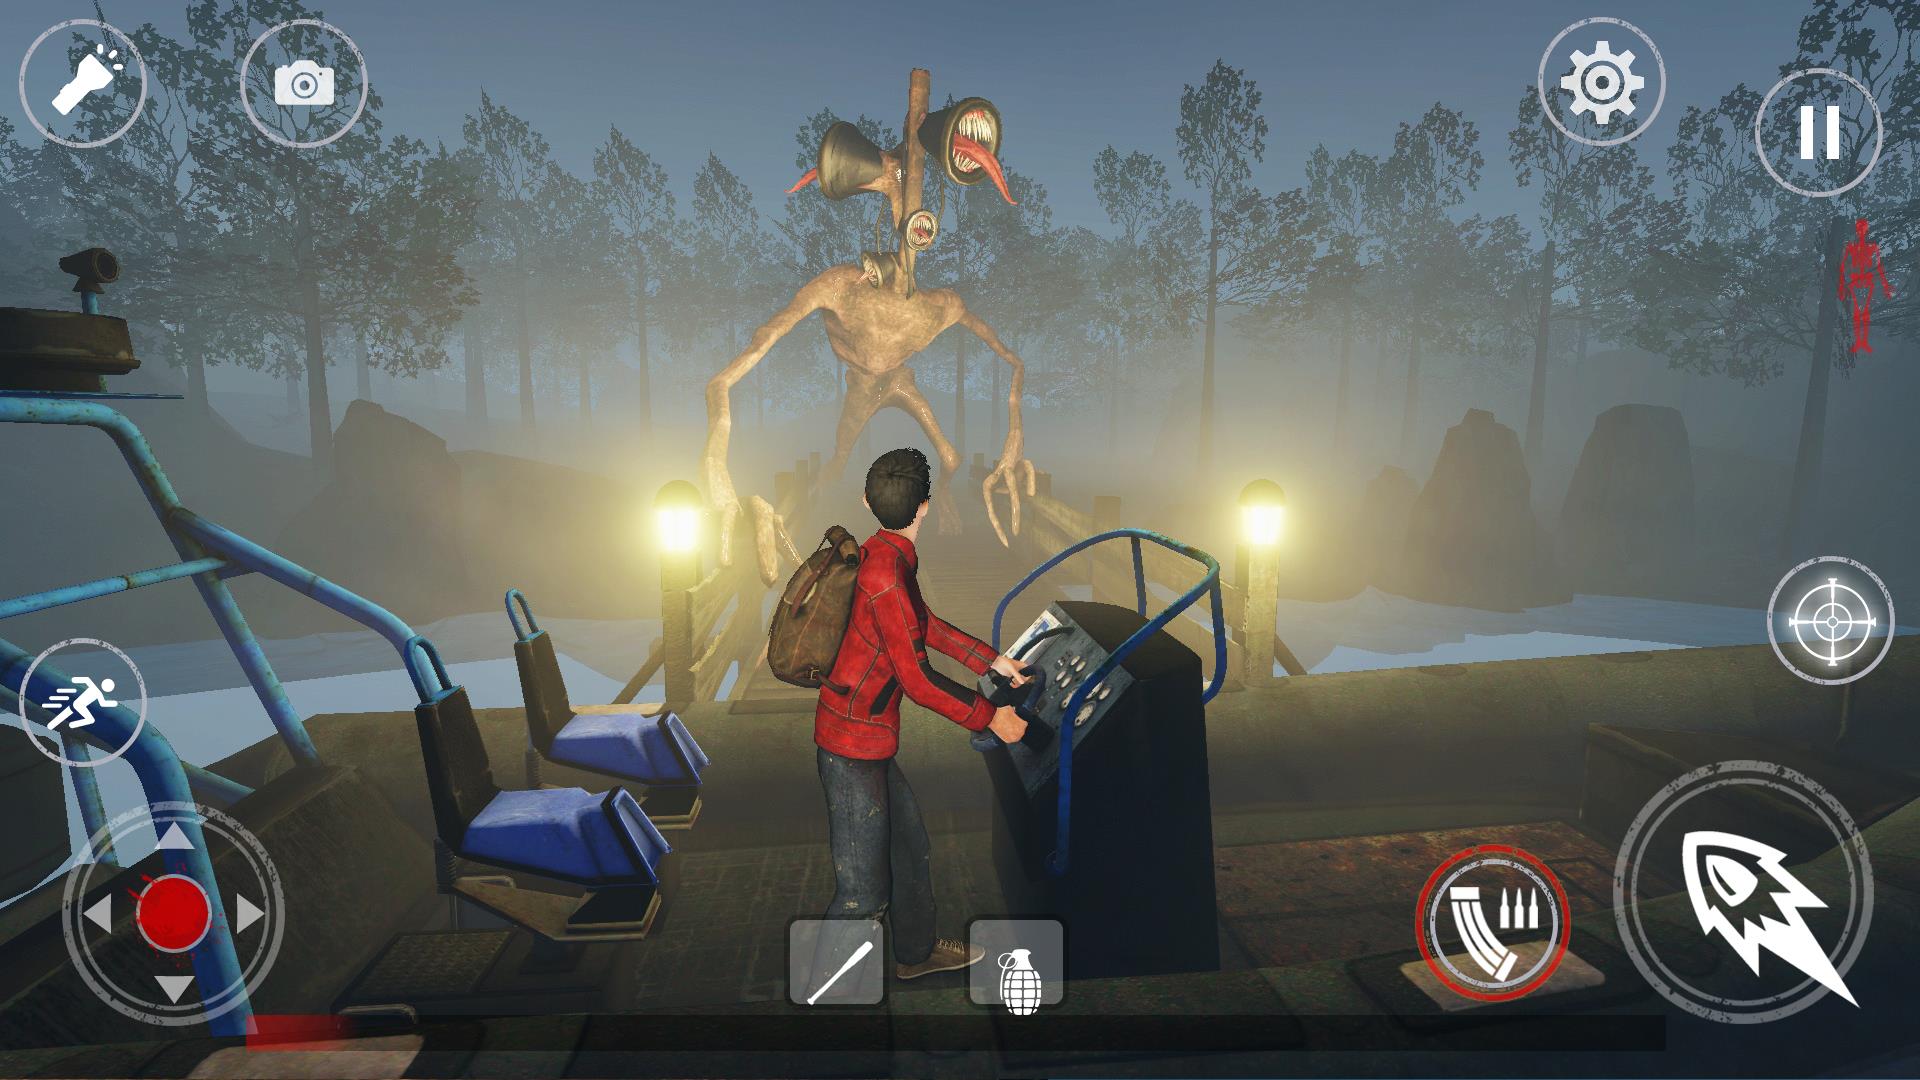 Siren Scary Head - Horror Game Screenshot 10